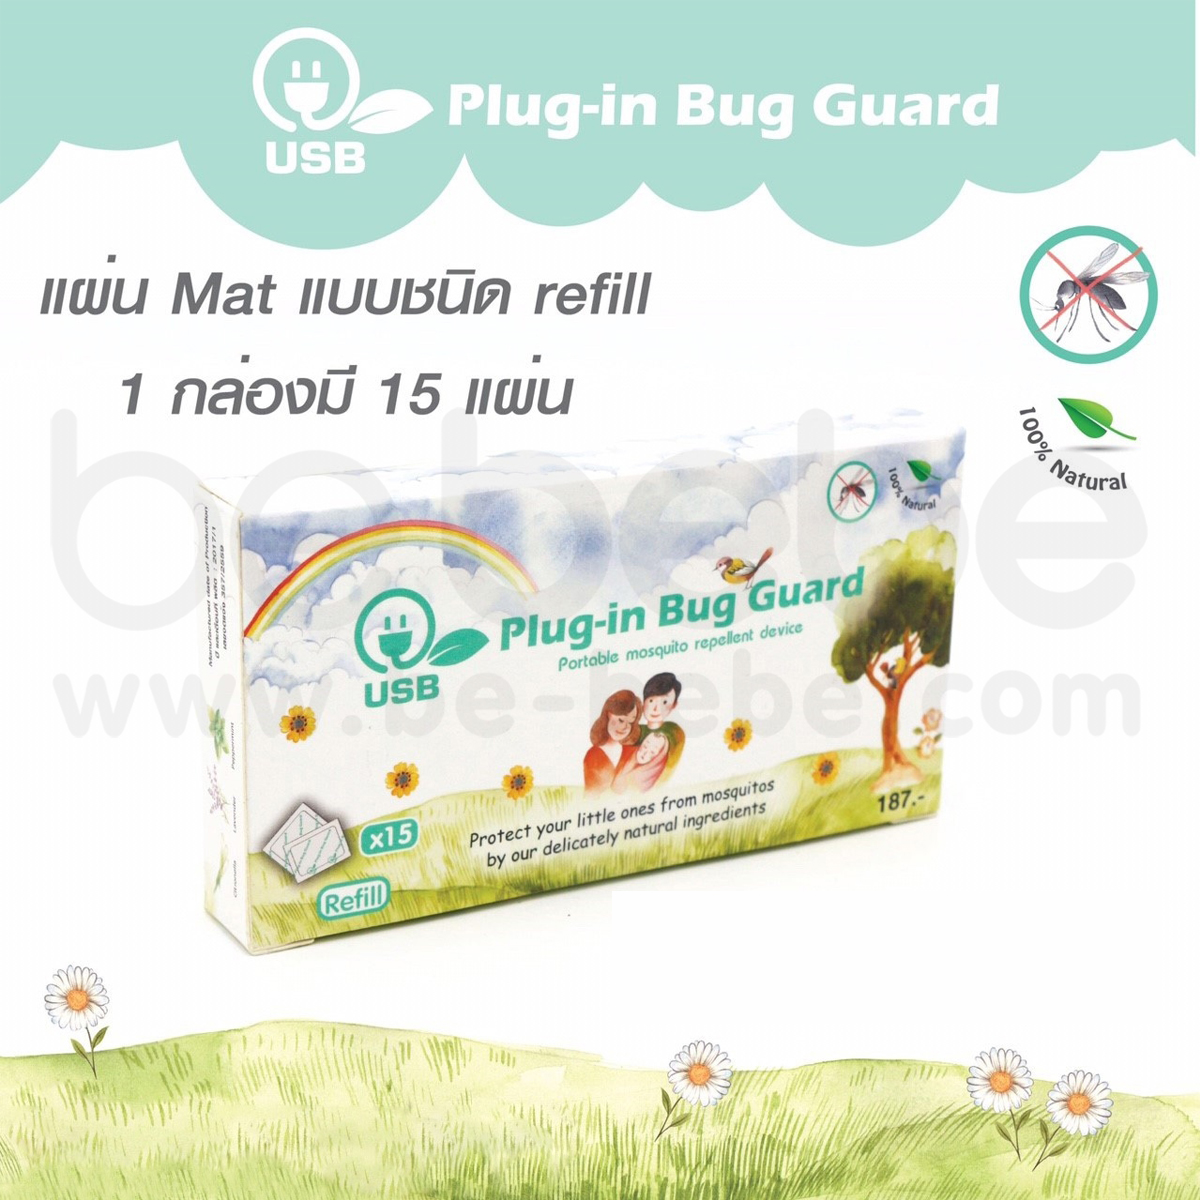 20190820113010plug-in-bug-guard-usb-mat refill.jpg